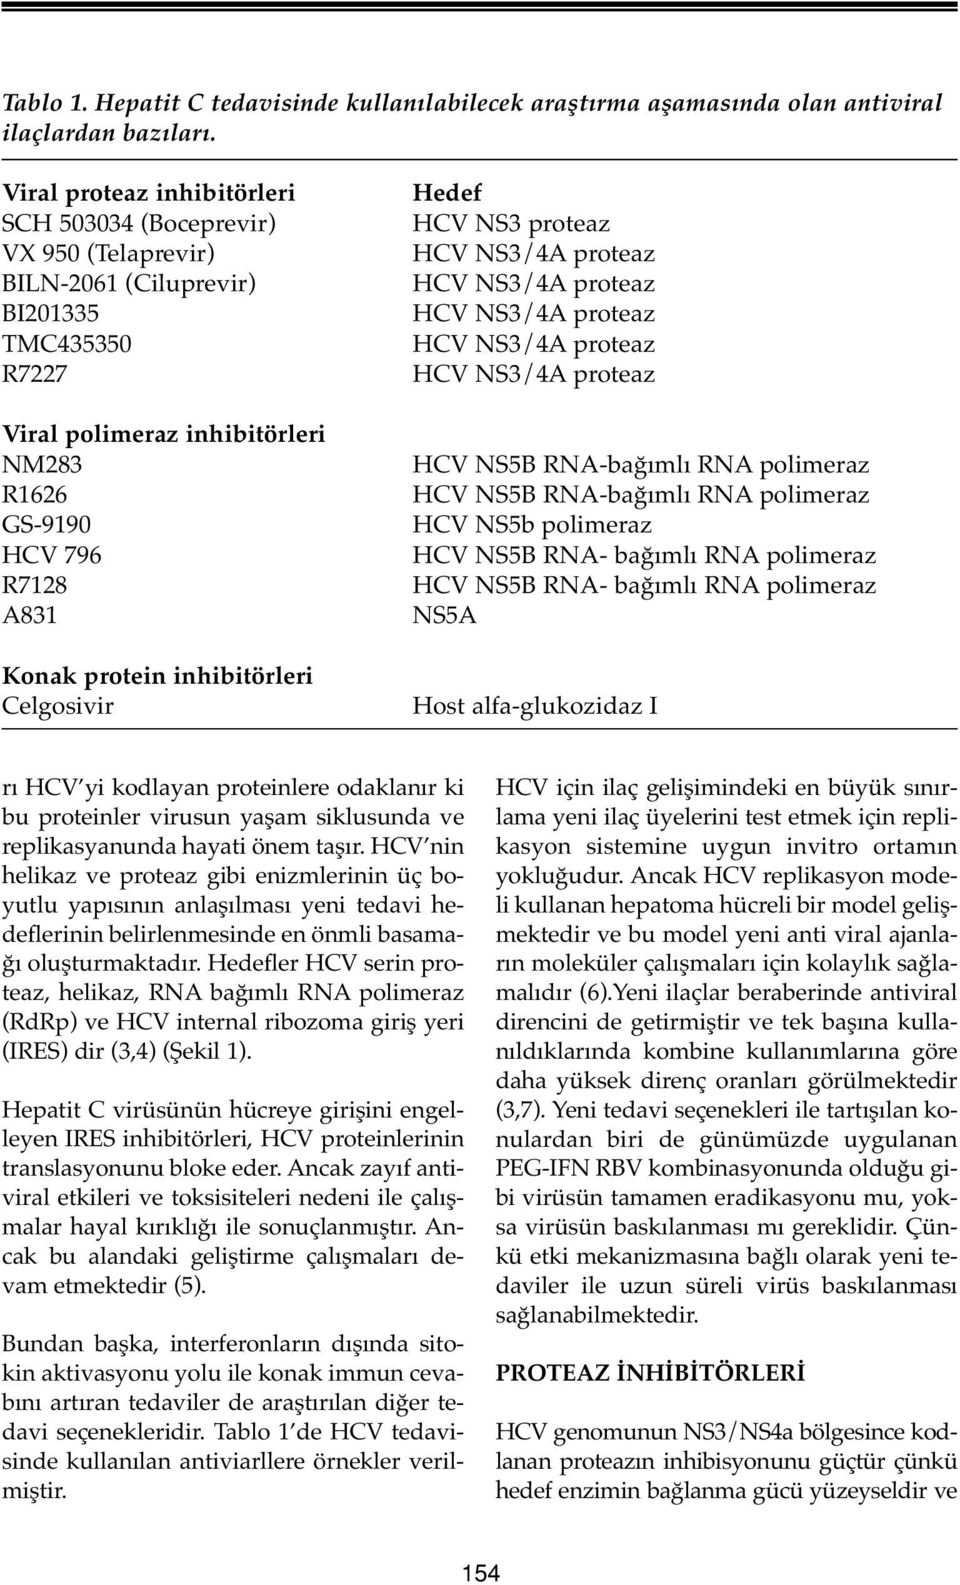 protein inhibitörleri Celgosivir Hedef HCV NS3 proteaz HCV NS5B RNA-bağımlı RNA polimeraz HCV NS5B RNA-bağımlı RNA polimeraz HCV NS5b polimeraz HCV NS5B RNA- bağımlı RNA polimeraz HCV NS5B RNA-